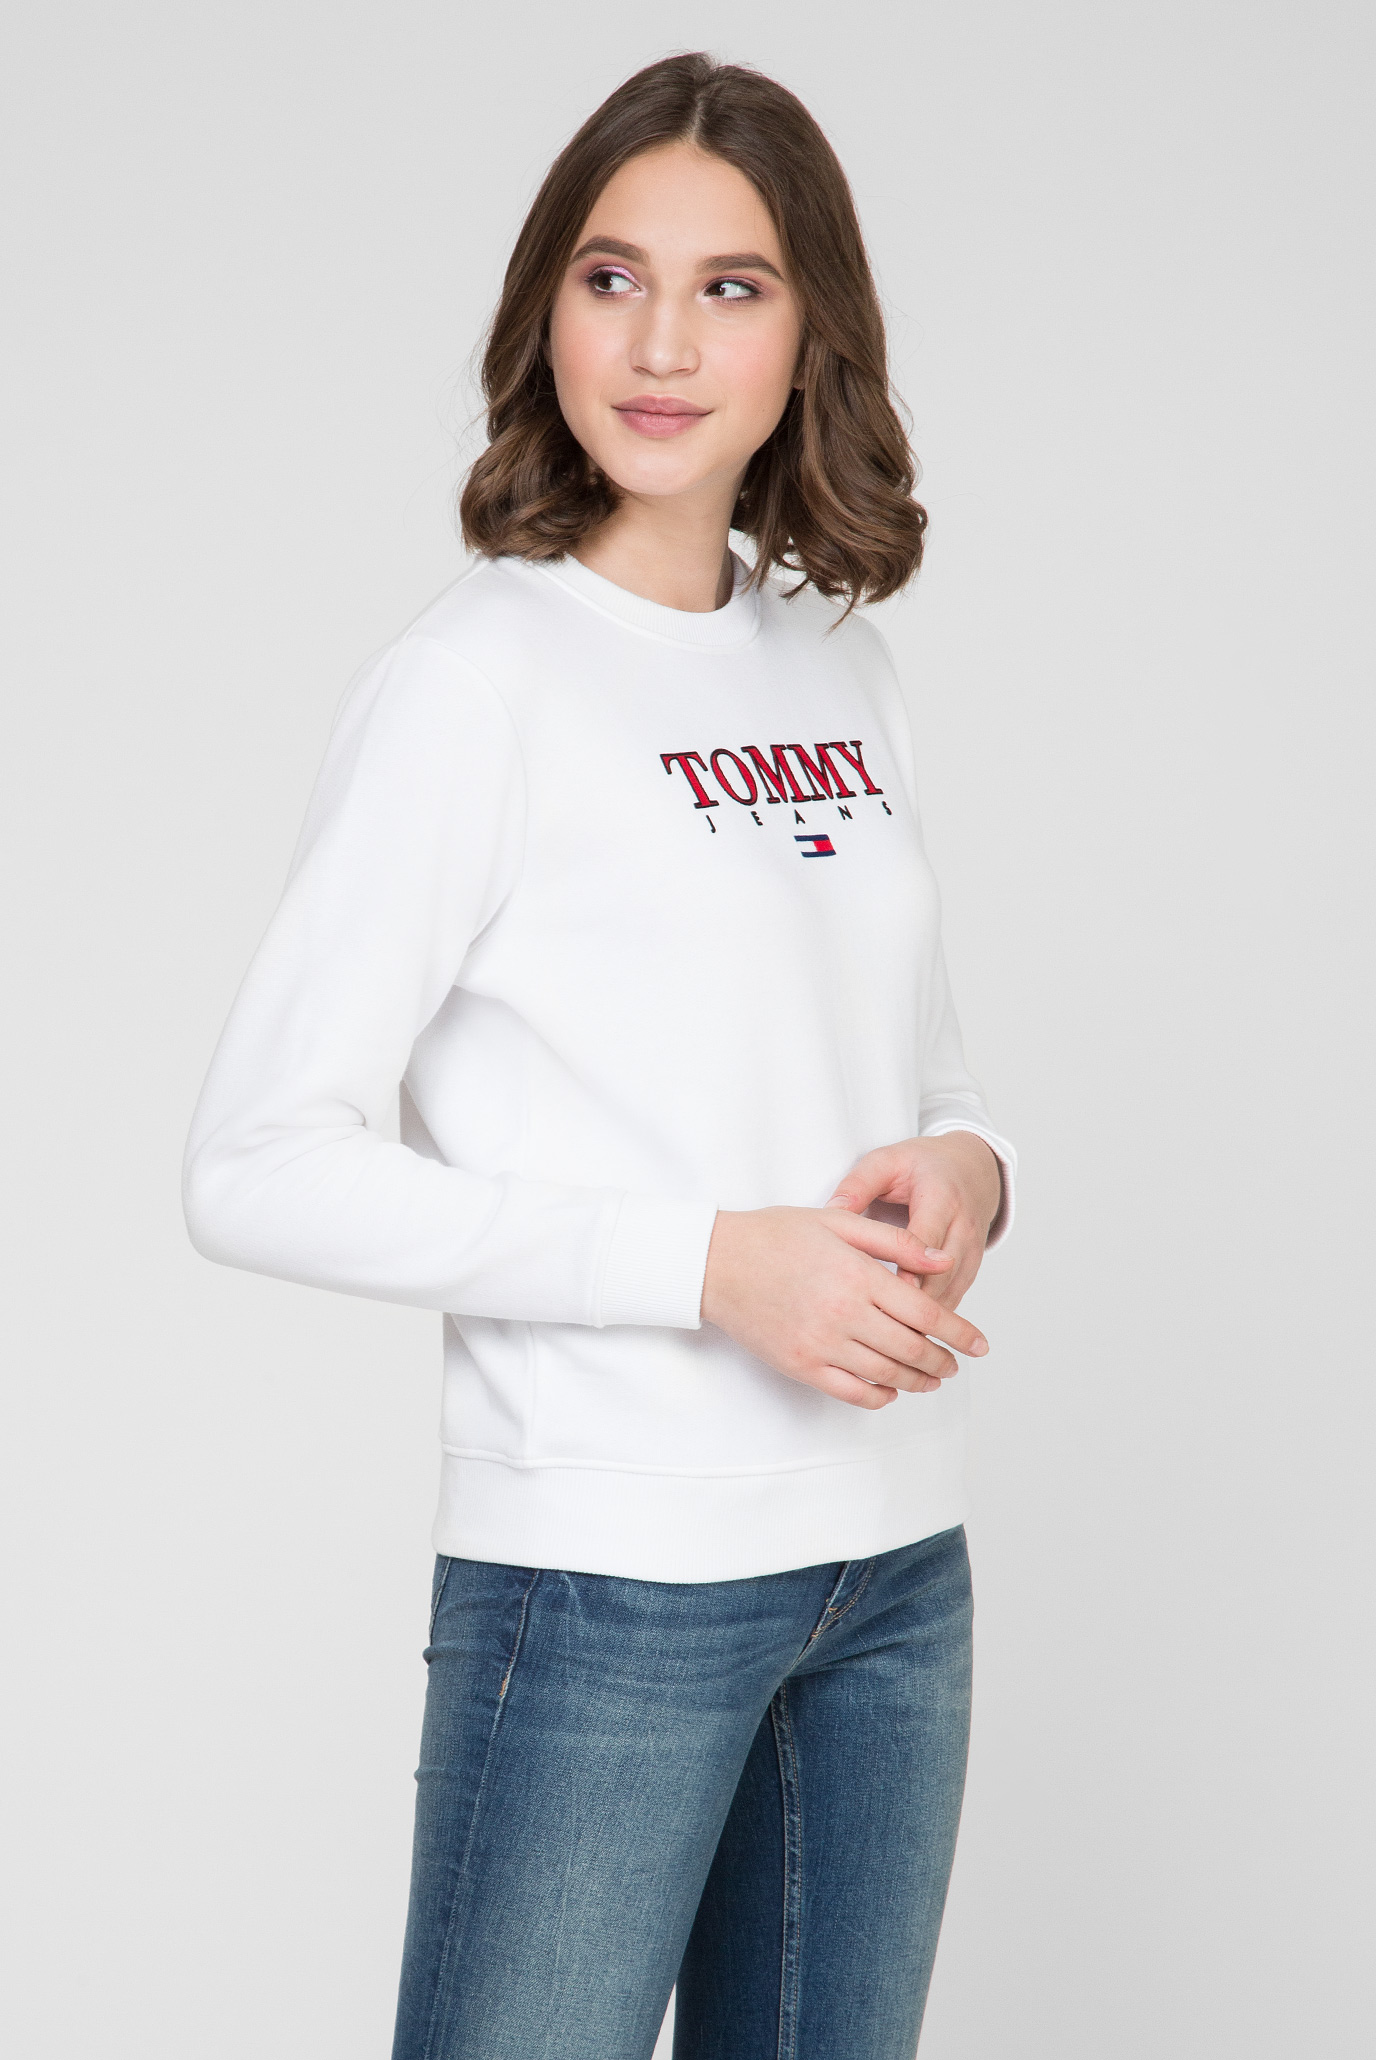 Tommy Hilfiger Girls Essential Hilfiger Tee L//S Long Sleeve Top